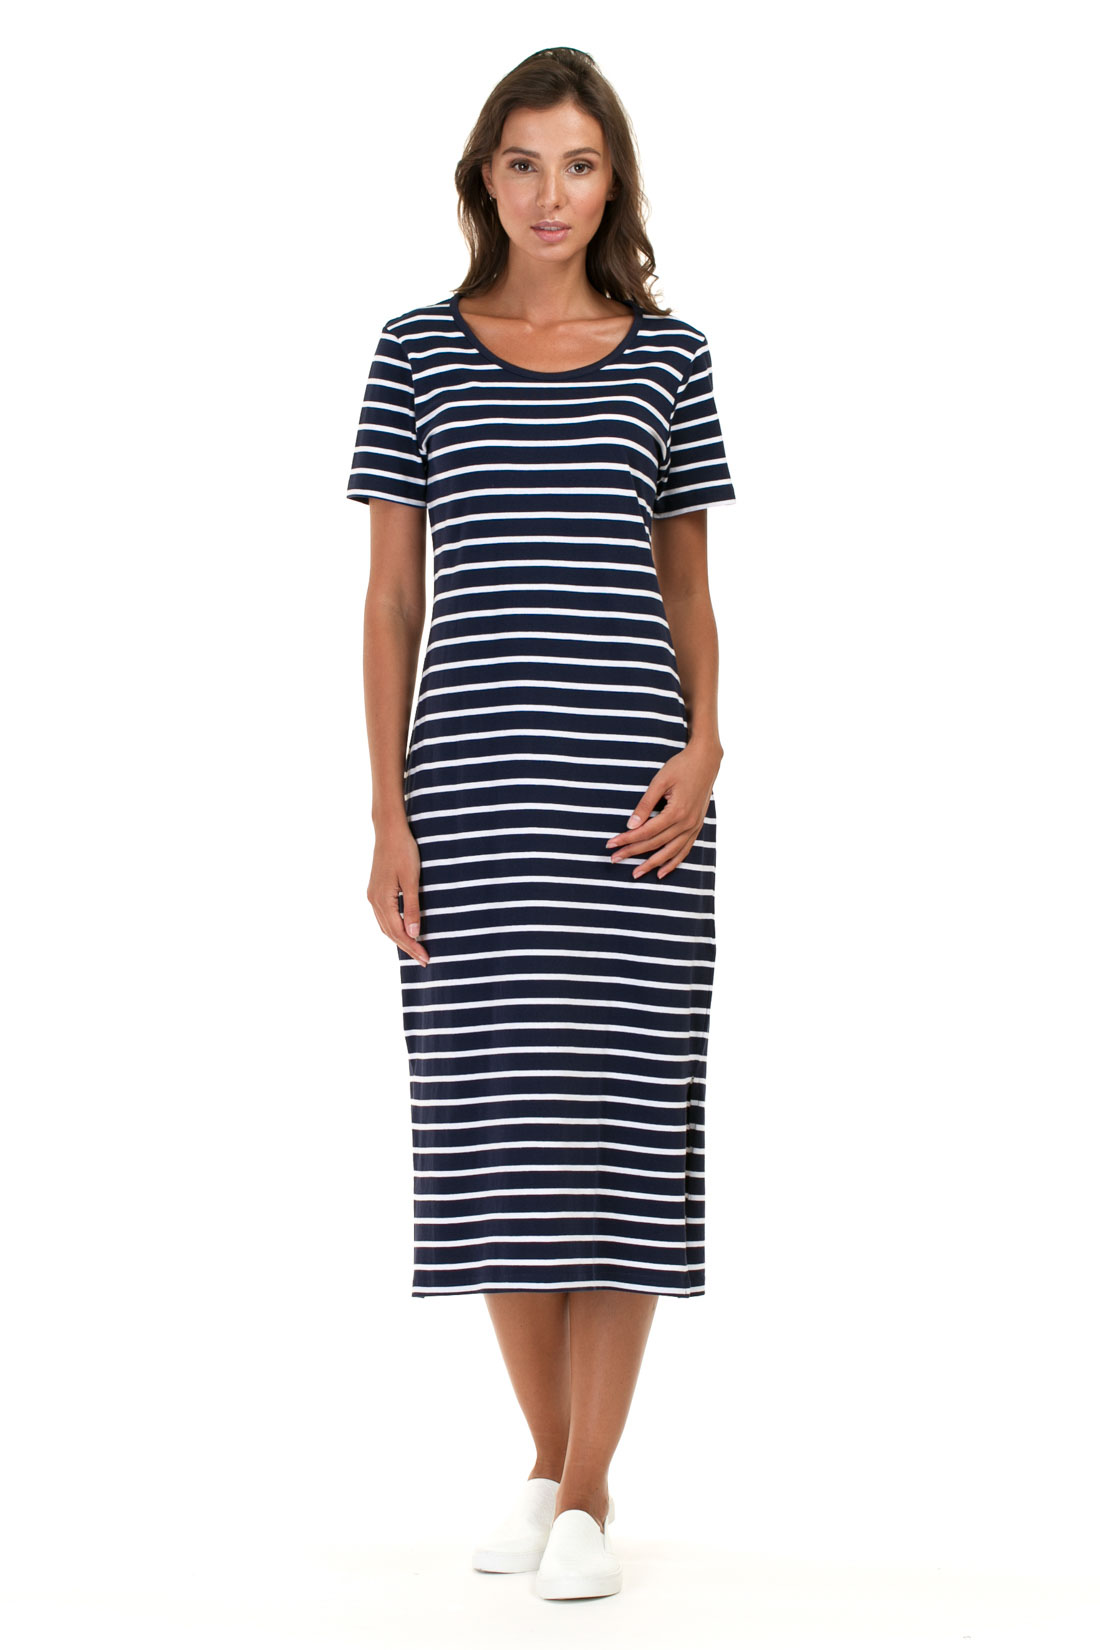 Платье-миди в морскую полоску (арт. baon B457099), размер XXL, цвет dark navy striped#синий Платье-миди в морскую полоску (арт. baon B457099) - фото 5